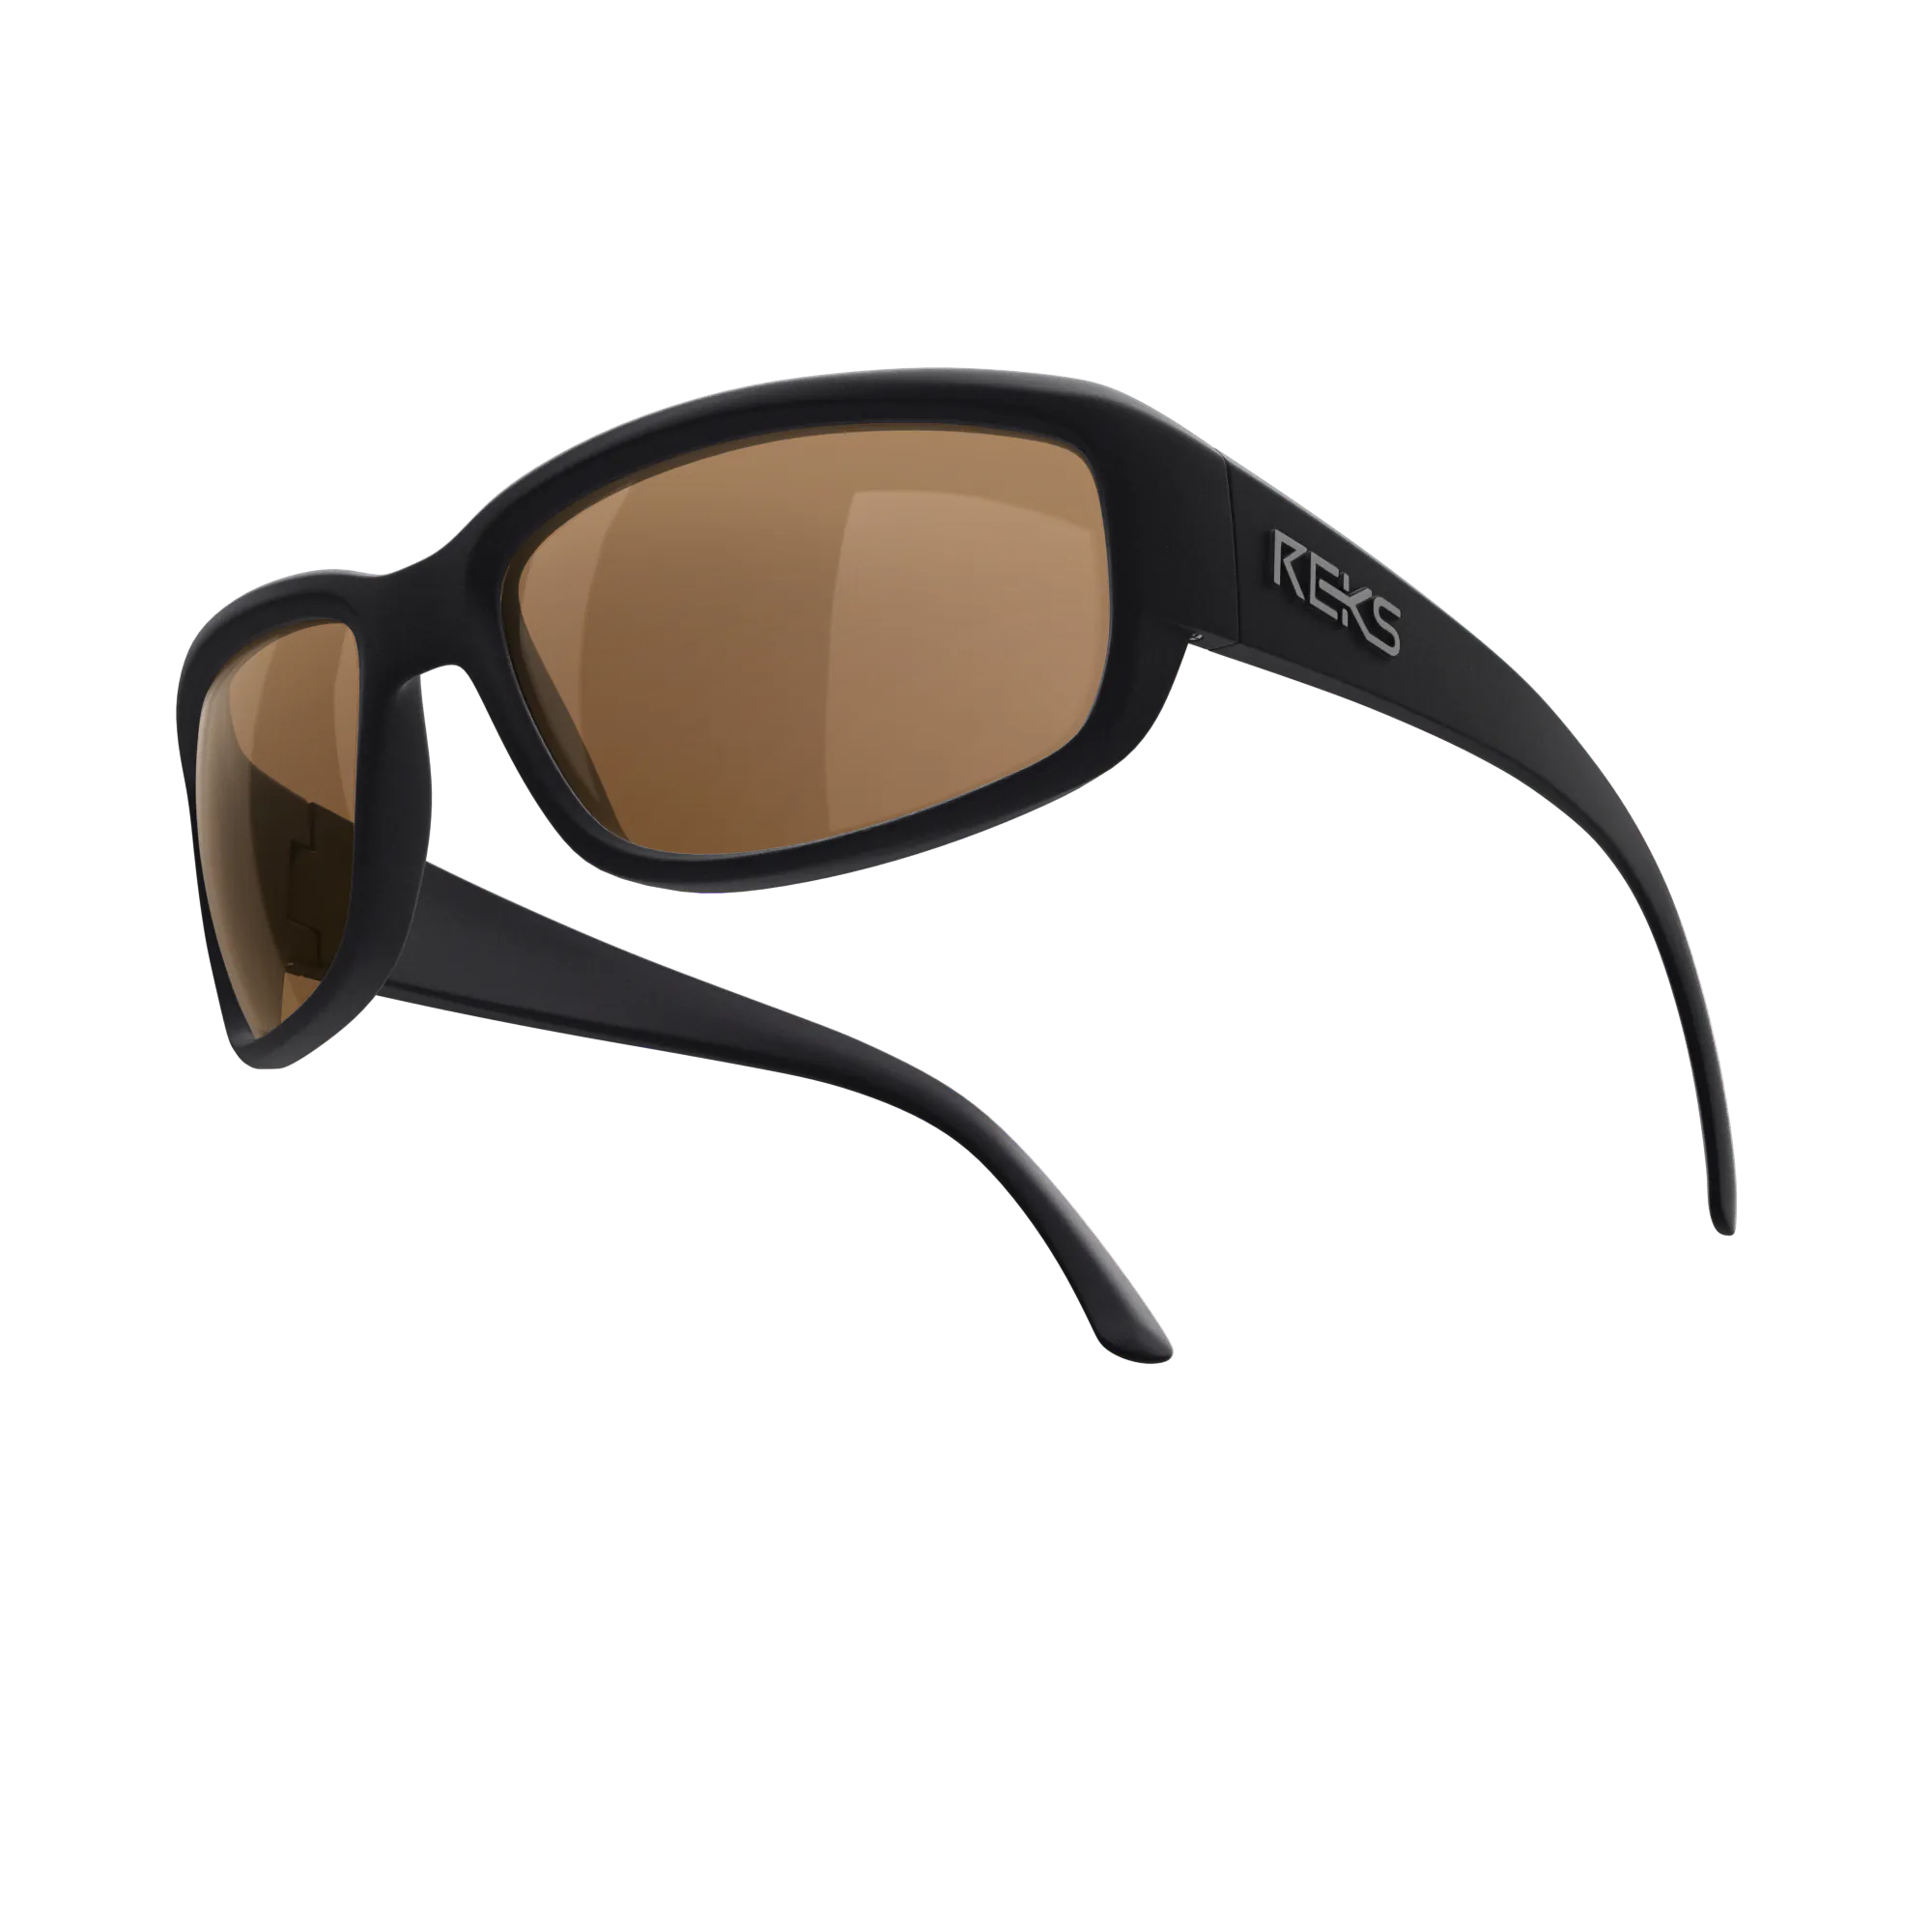 Buy Gold Dreams Polarized Wayfarer Sunglasses - Woggles